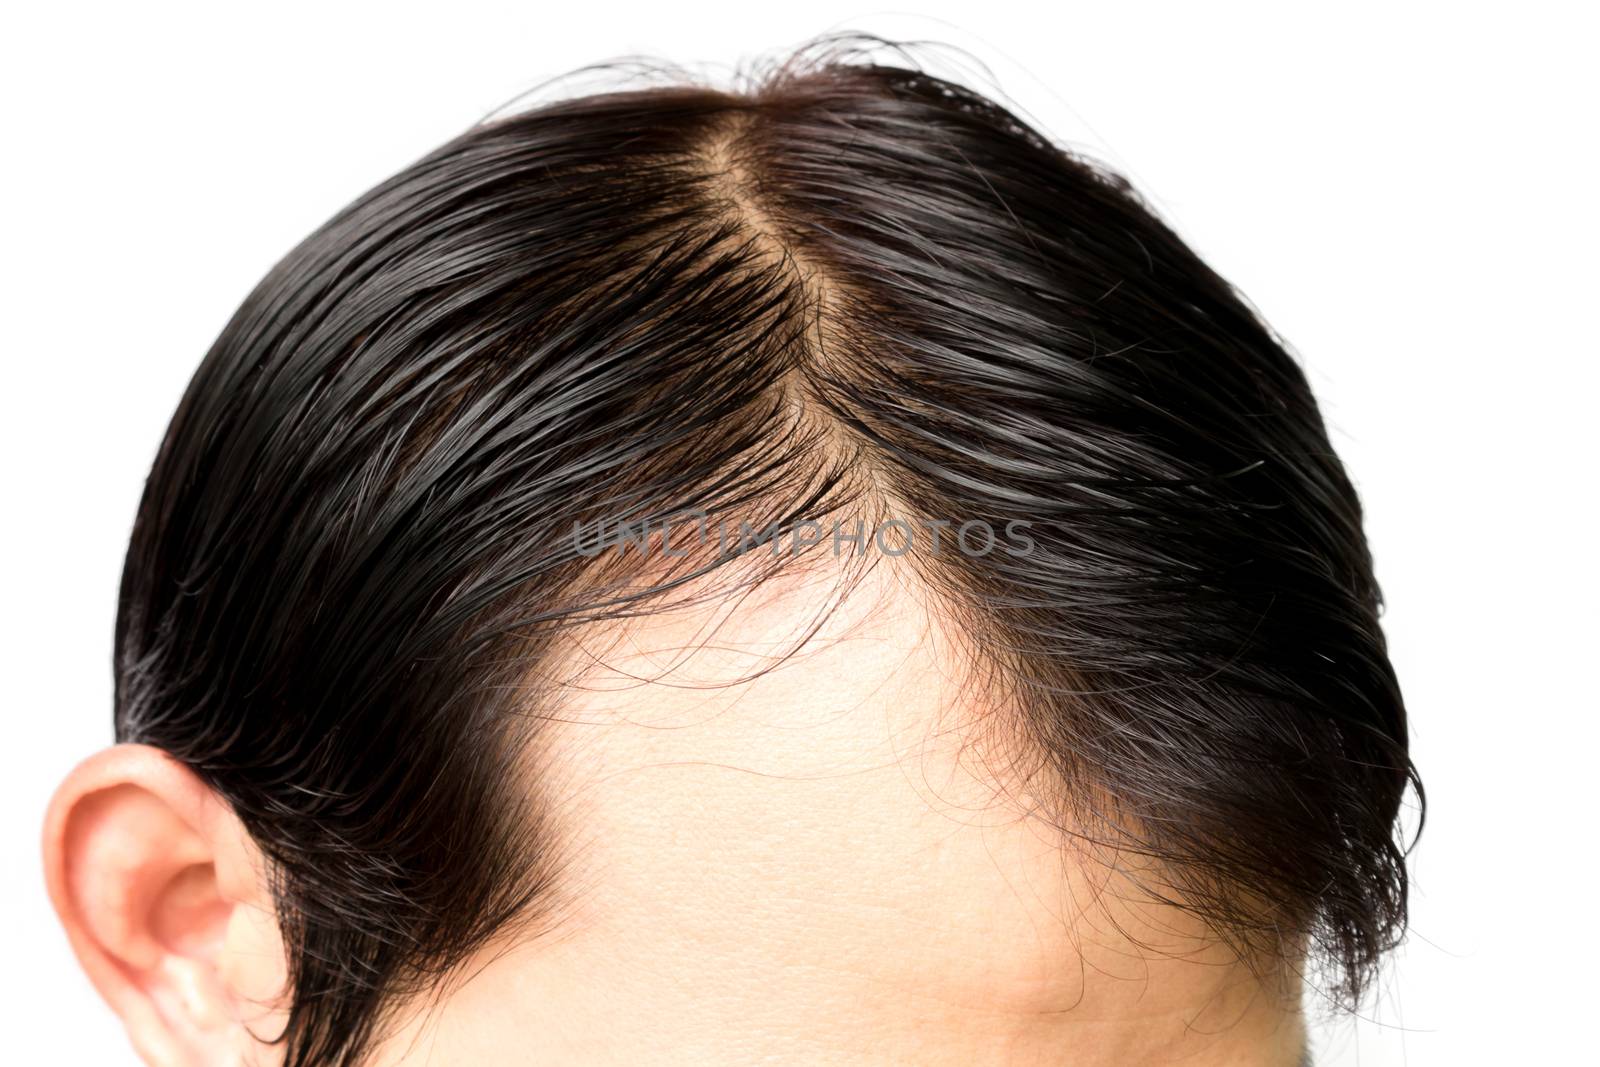 Closeup young man serious hair loss problem for hair loss concep by pt.pongsak@gmail.com